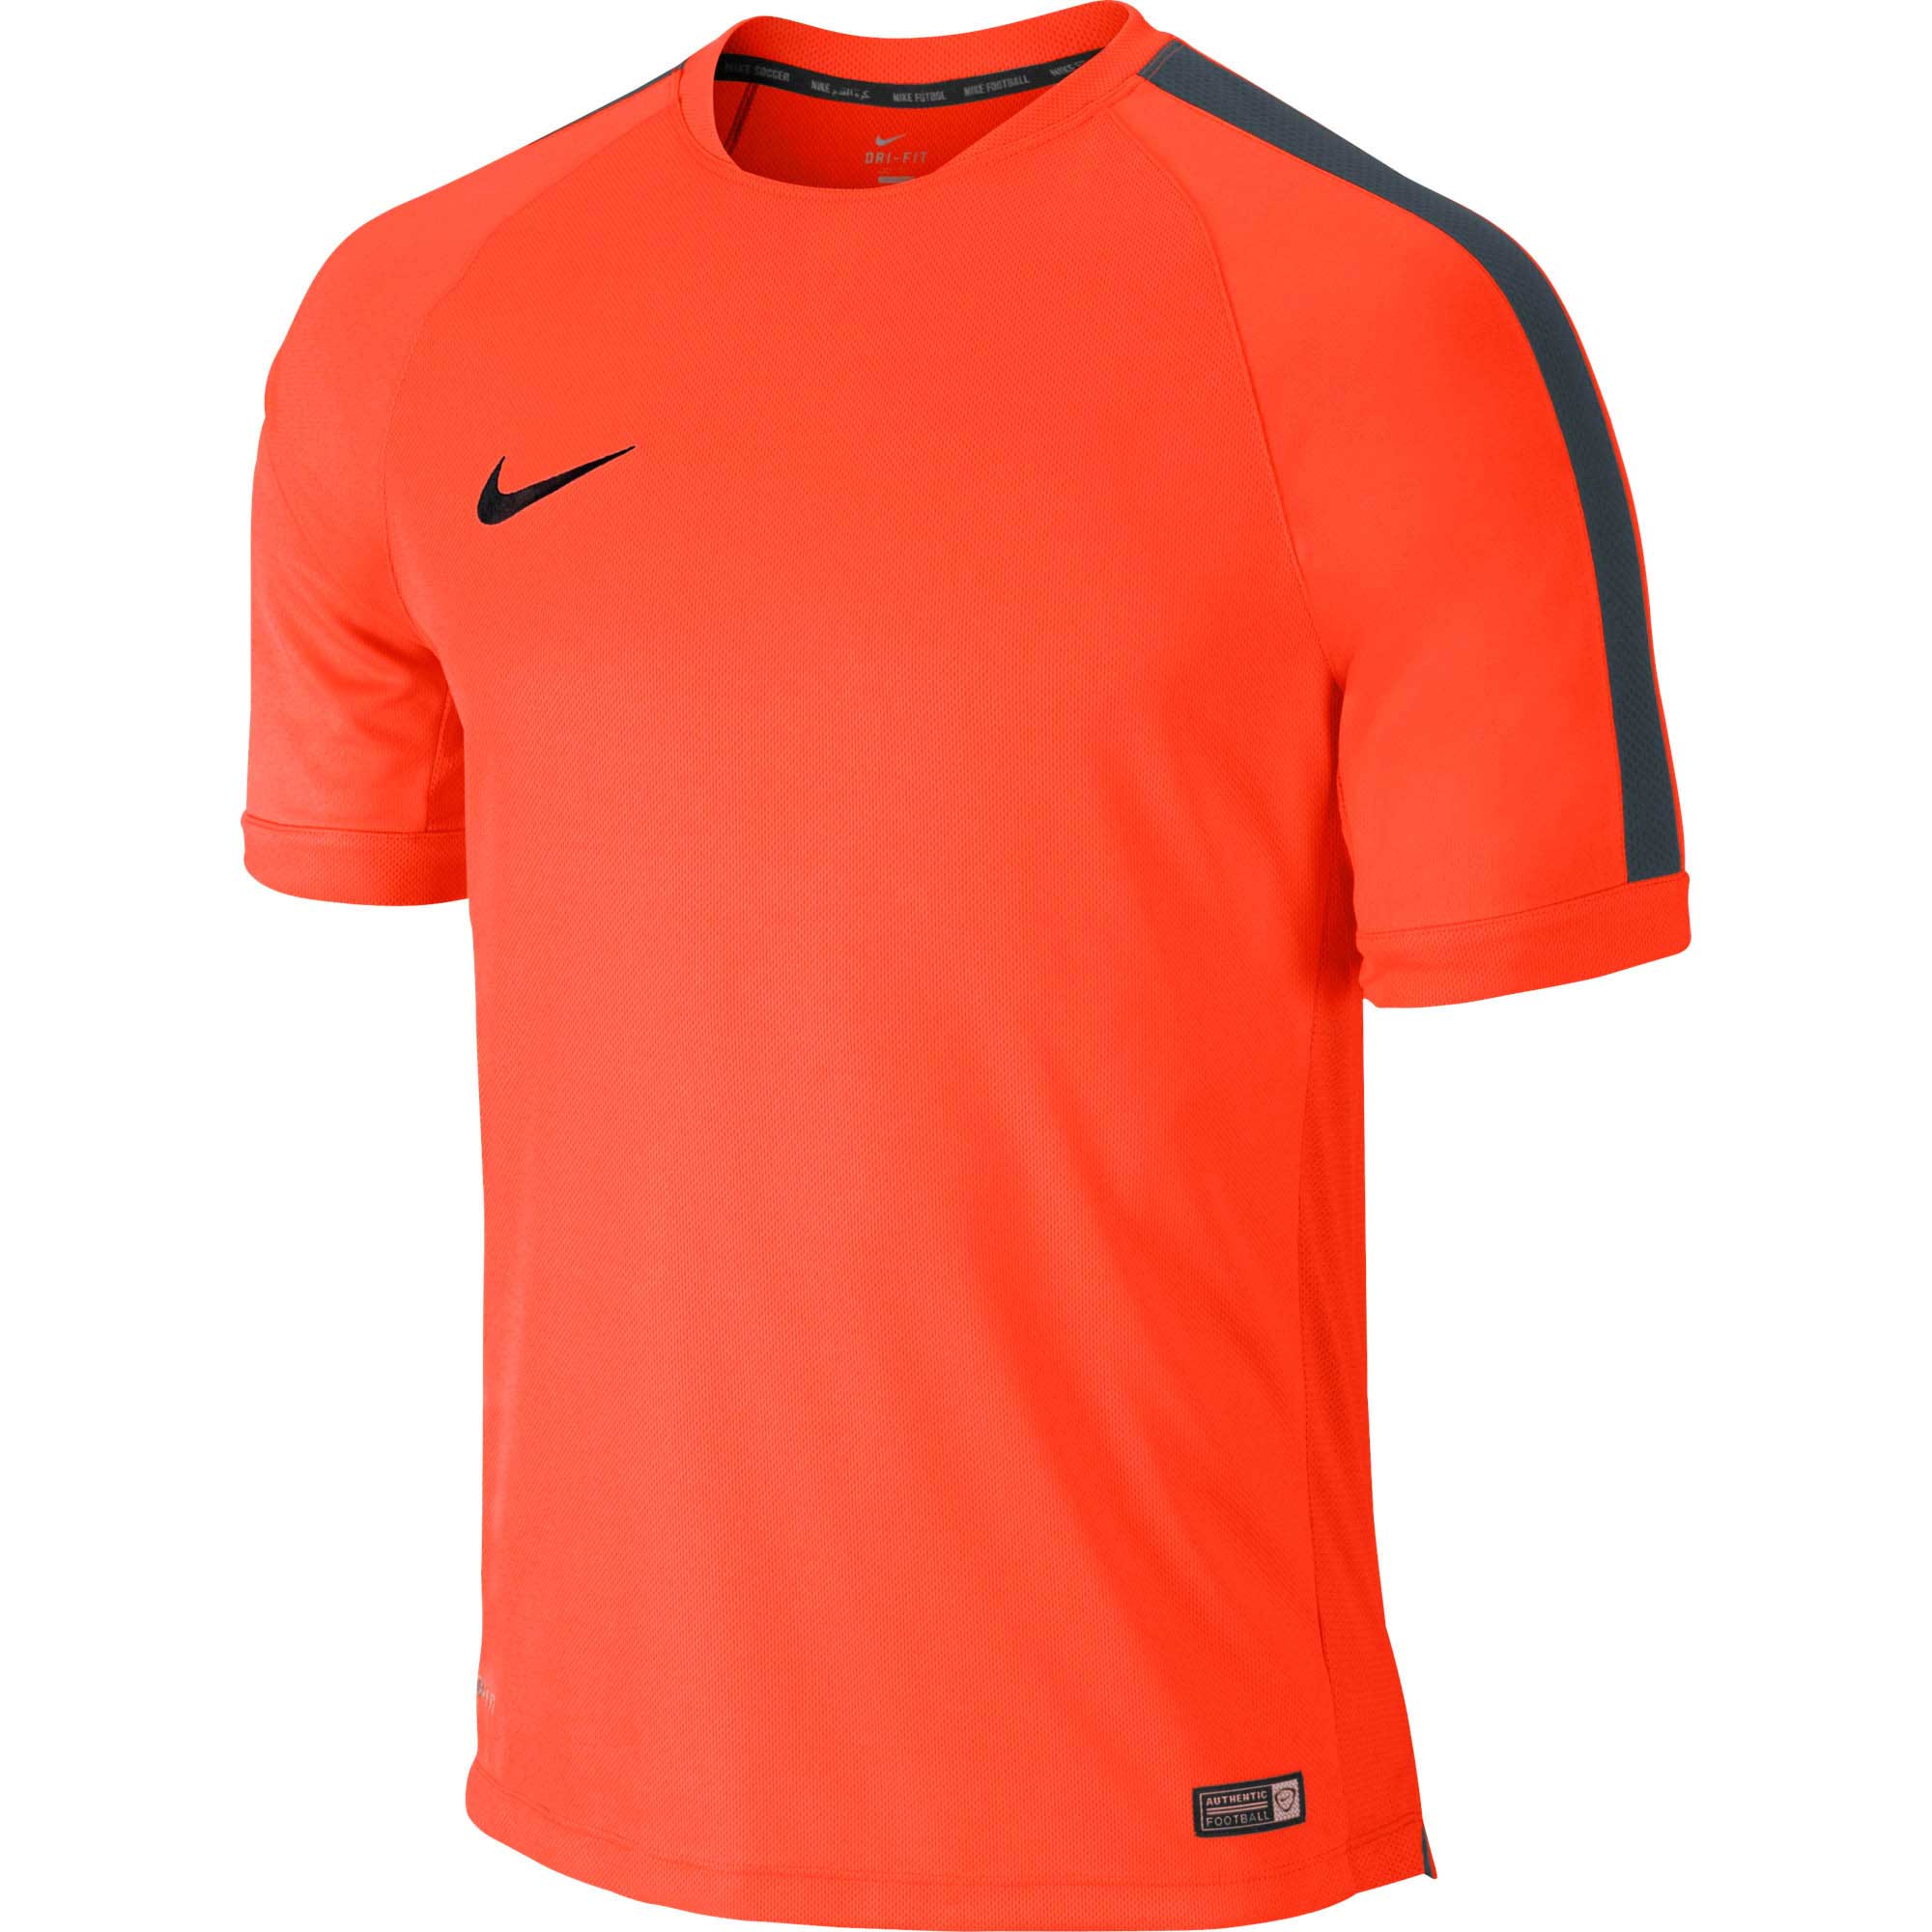 Nike Squad Flash Training Top - Nike Soccer Shirts